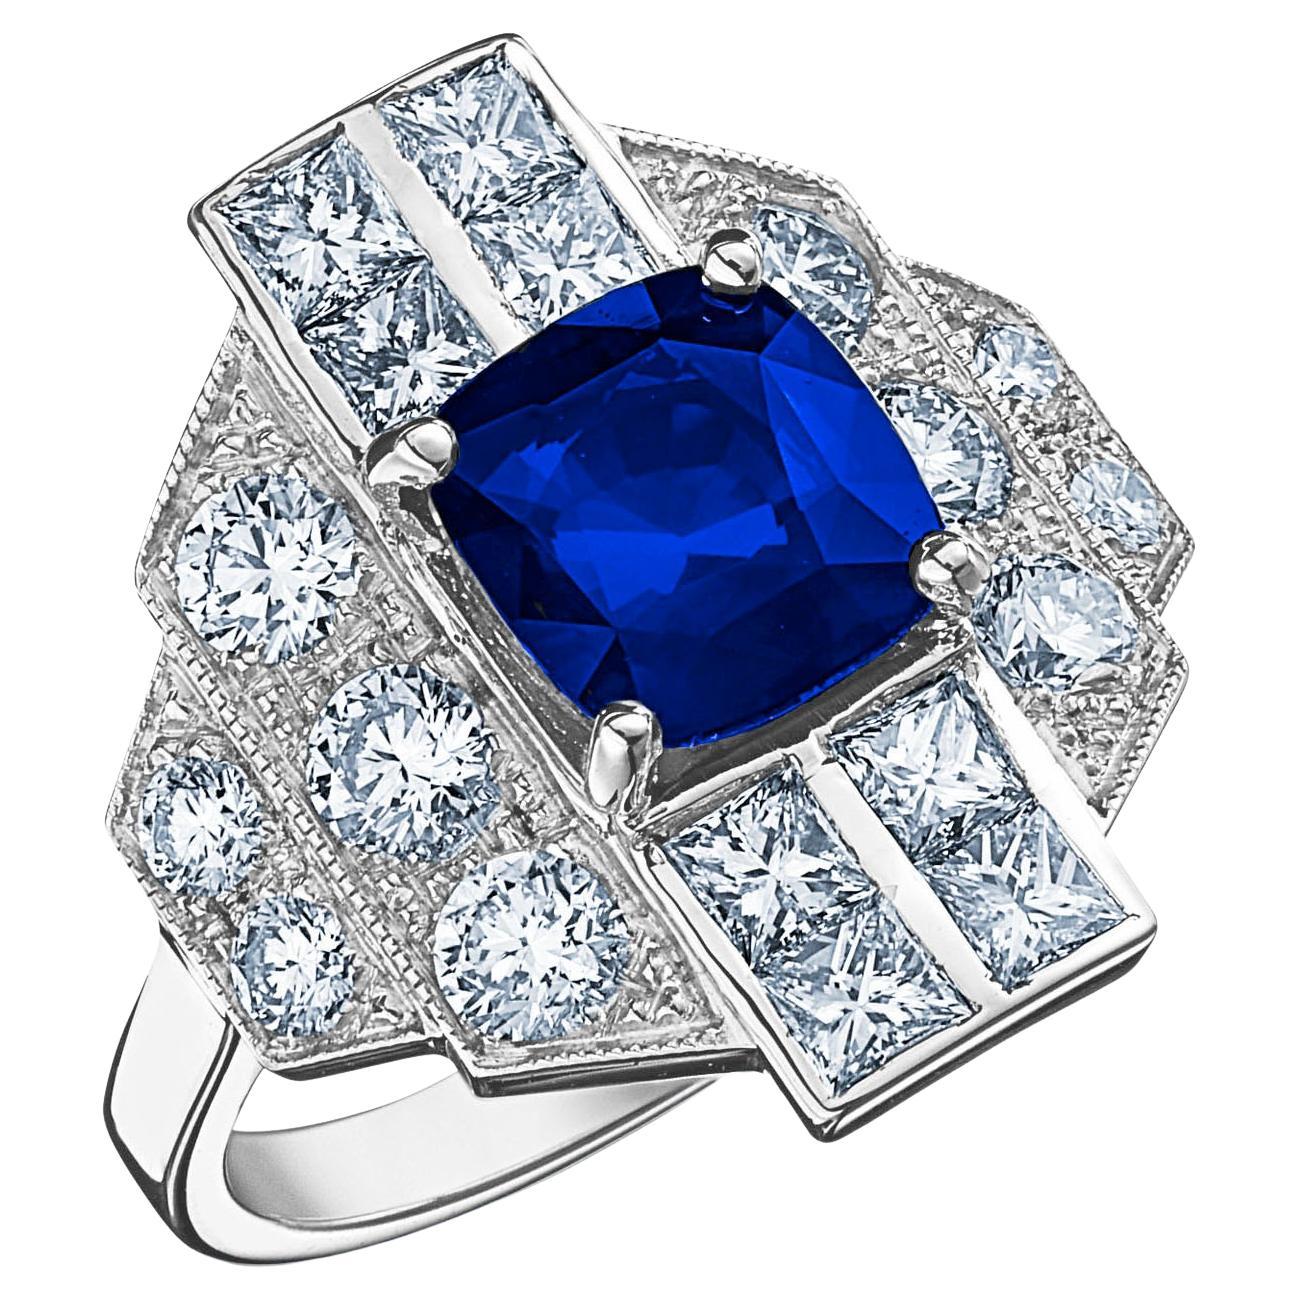 18k White Gold 2.65 Ct Royal Blue Cushion Sapphire Ring Set with 1.69 Ct Diamond